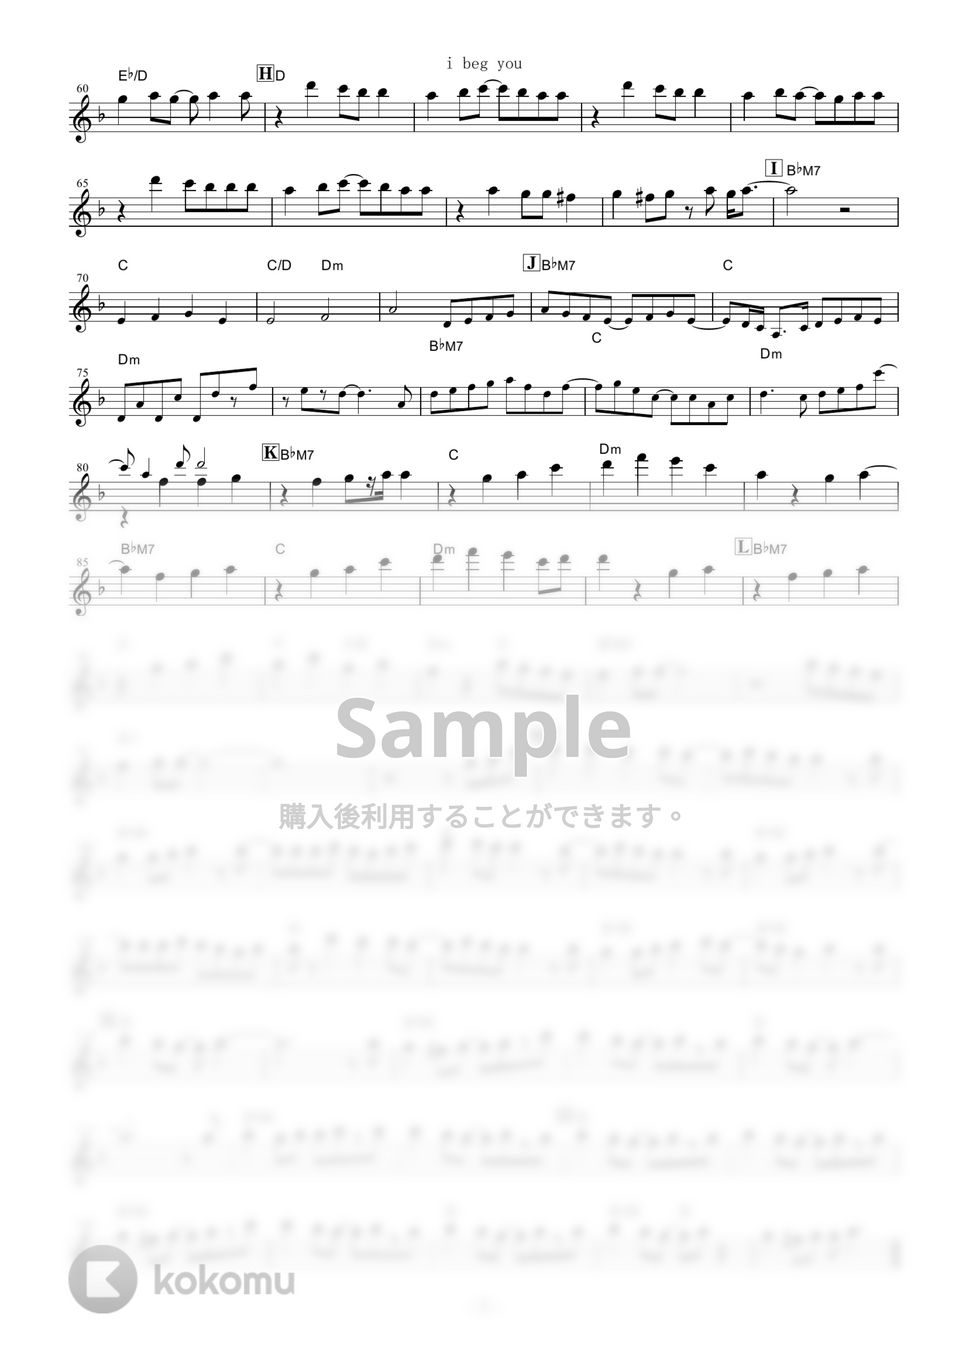 Aimer - I beg you (『劇場版「Fate/stay night [Heaven's Feel]」 Ⅱ.lost butterfly』 / in Bb) by muta-sax